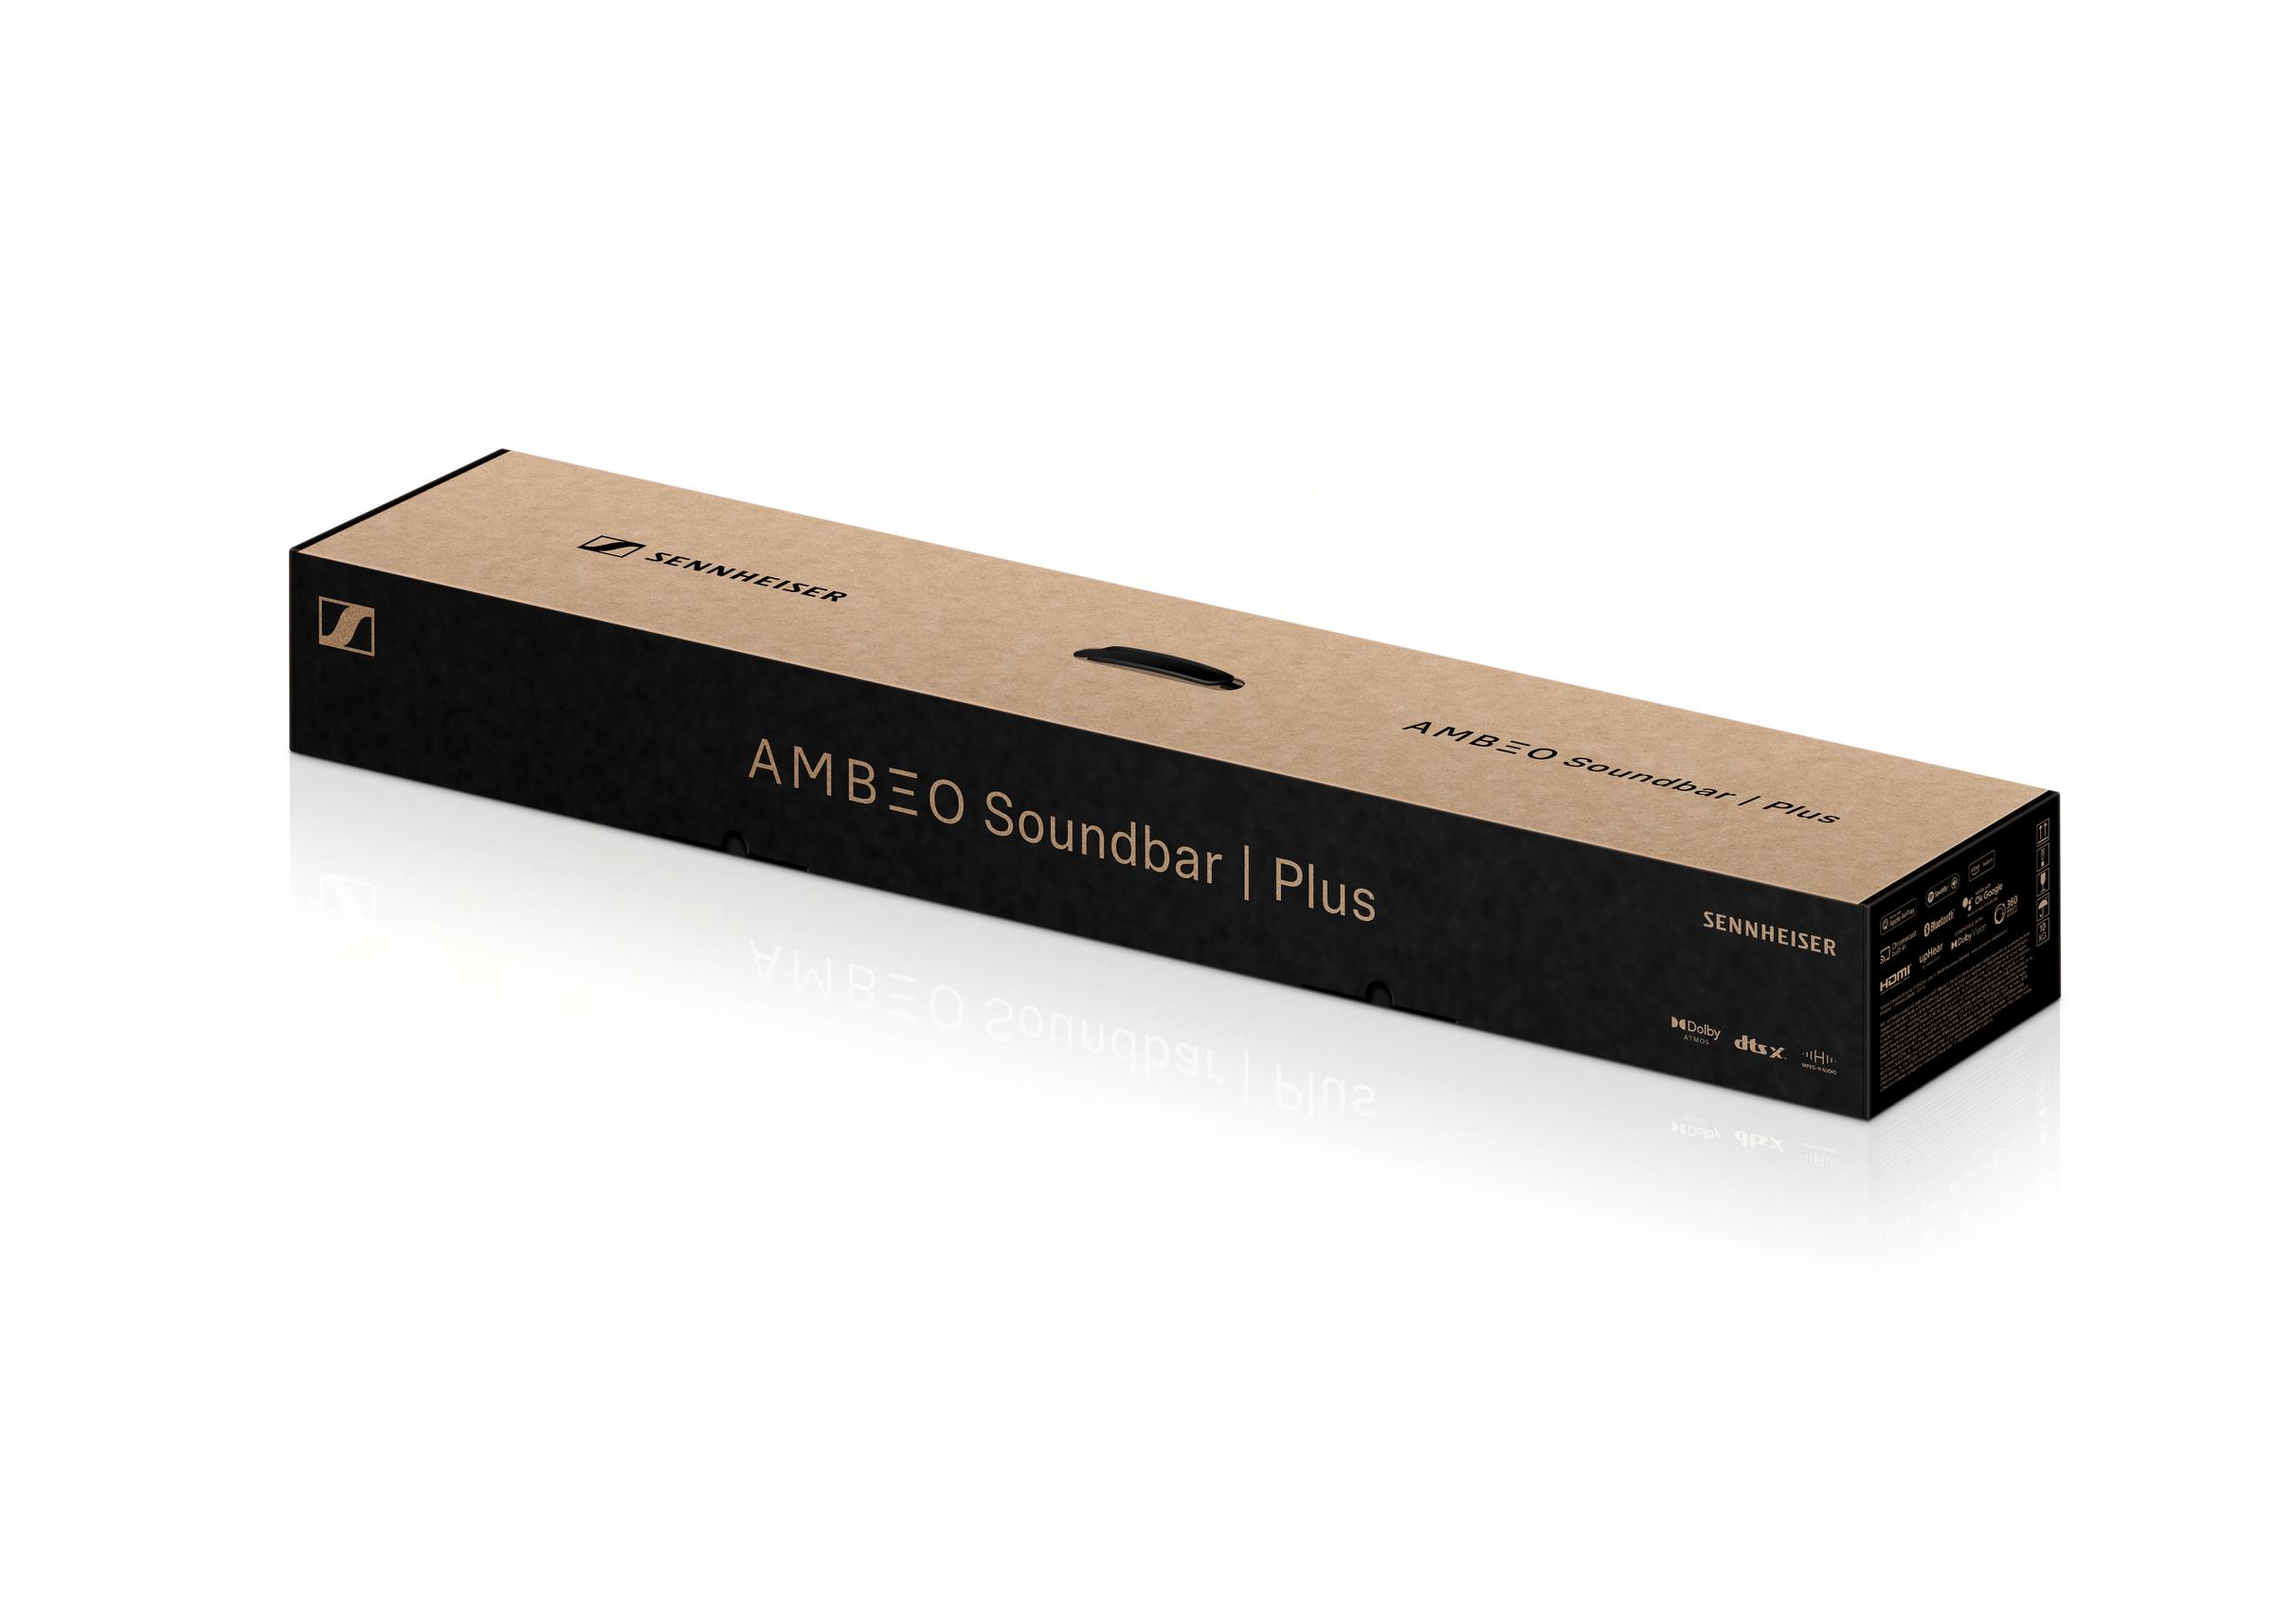 AMBEO Soundbar Plus Boxed